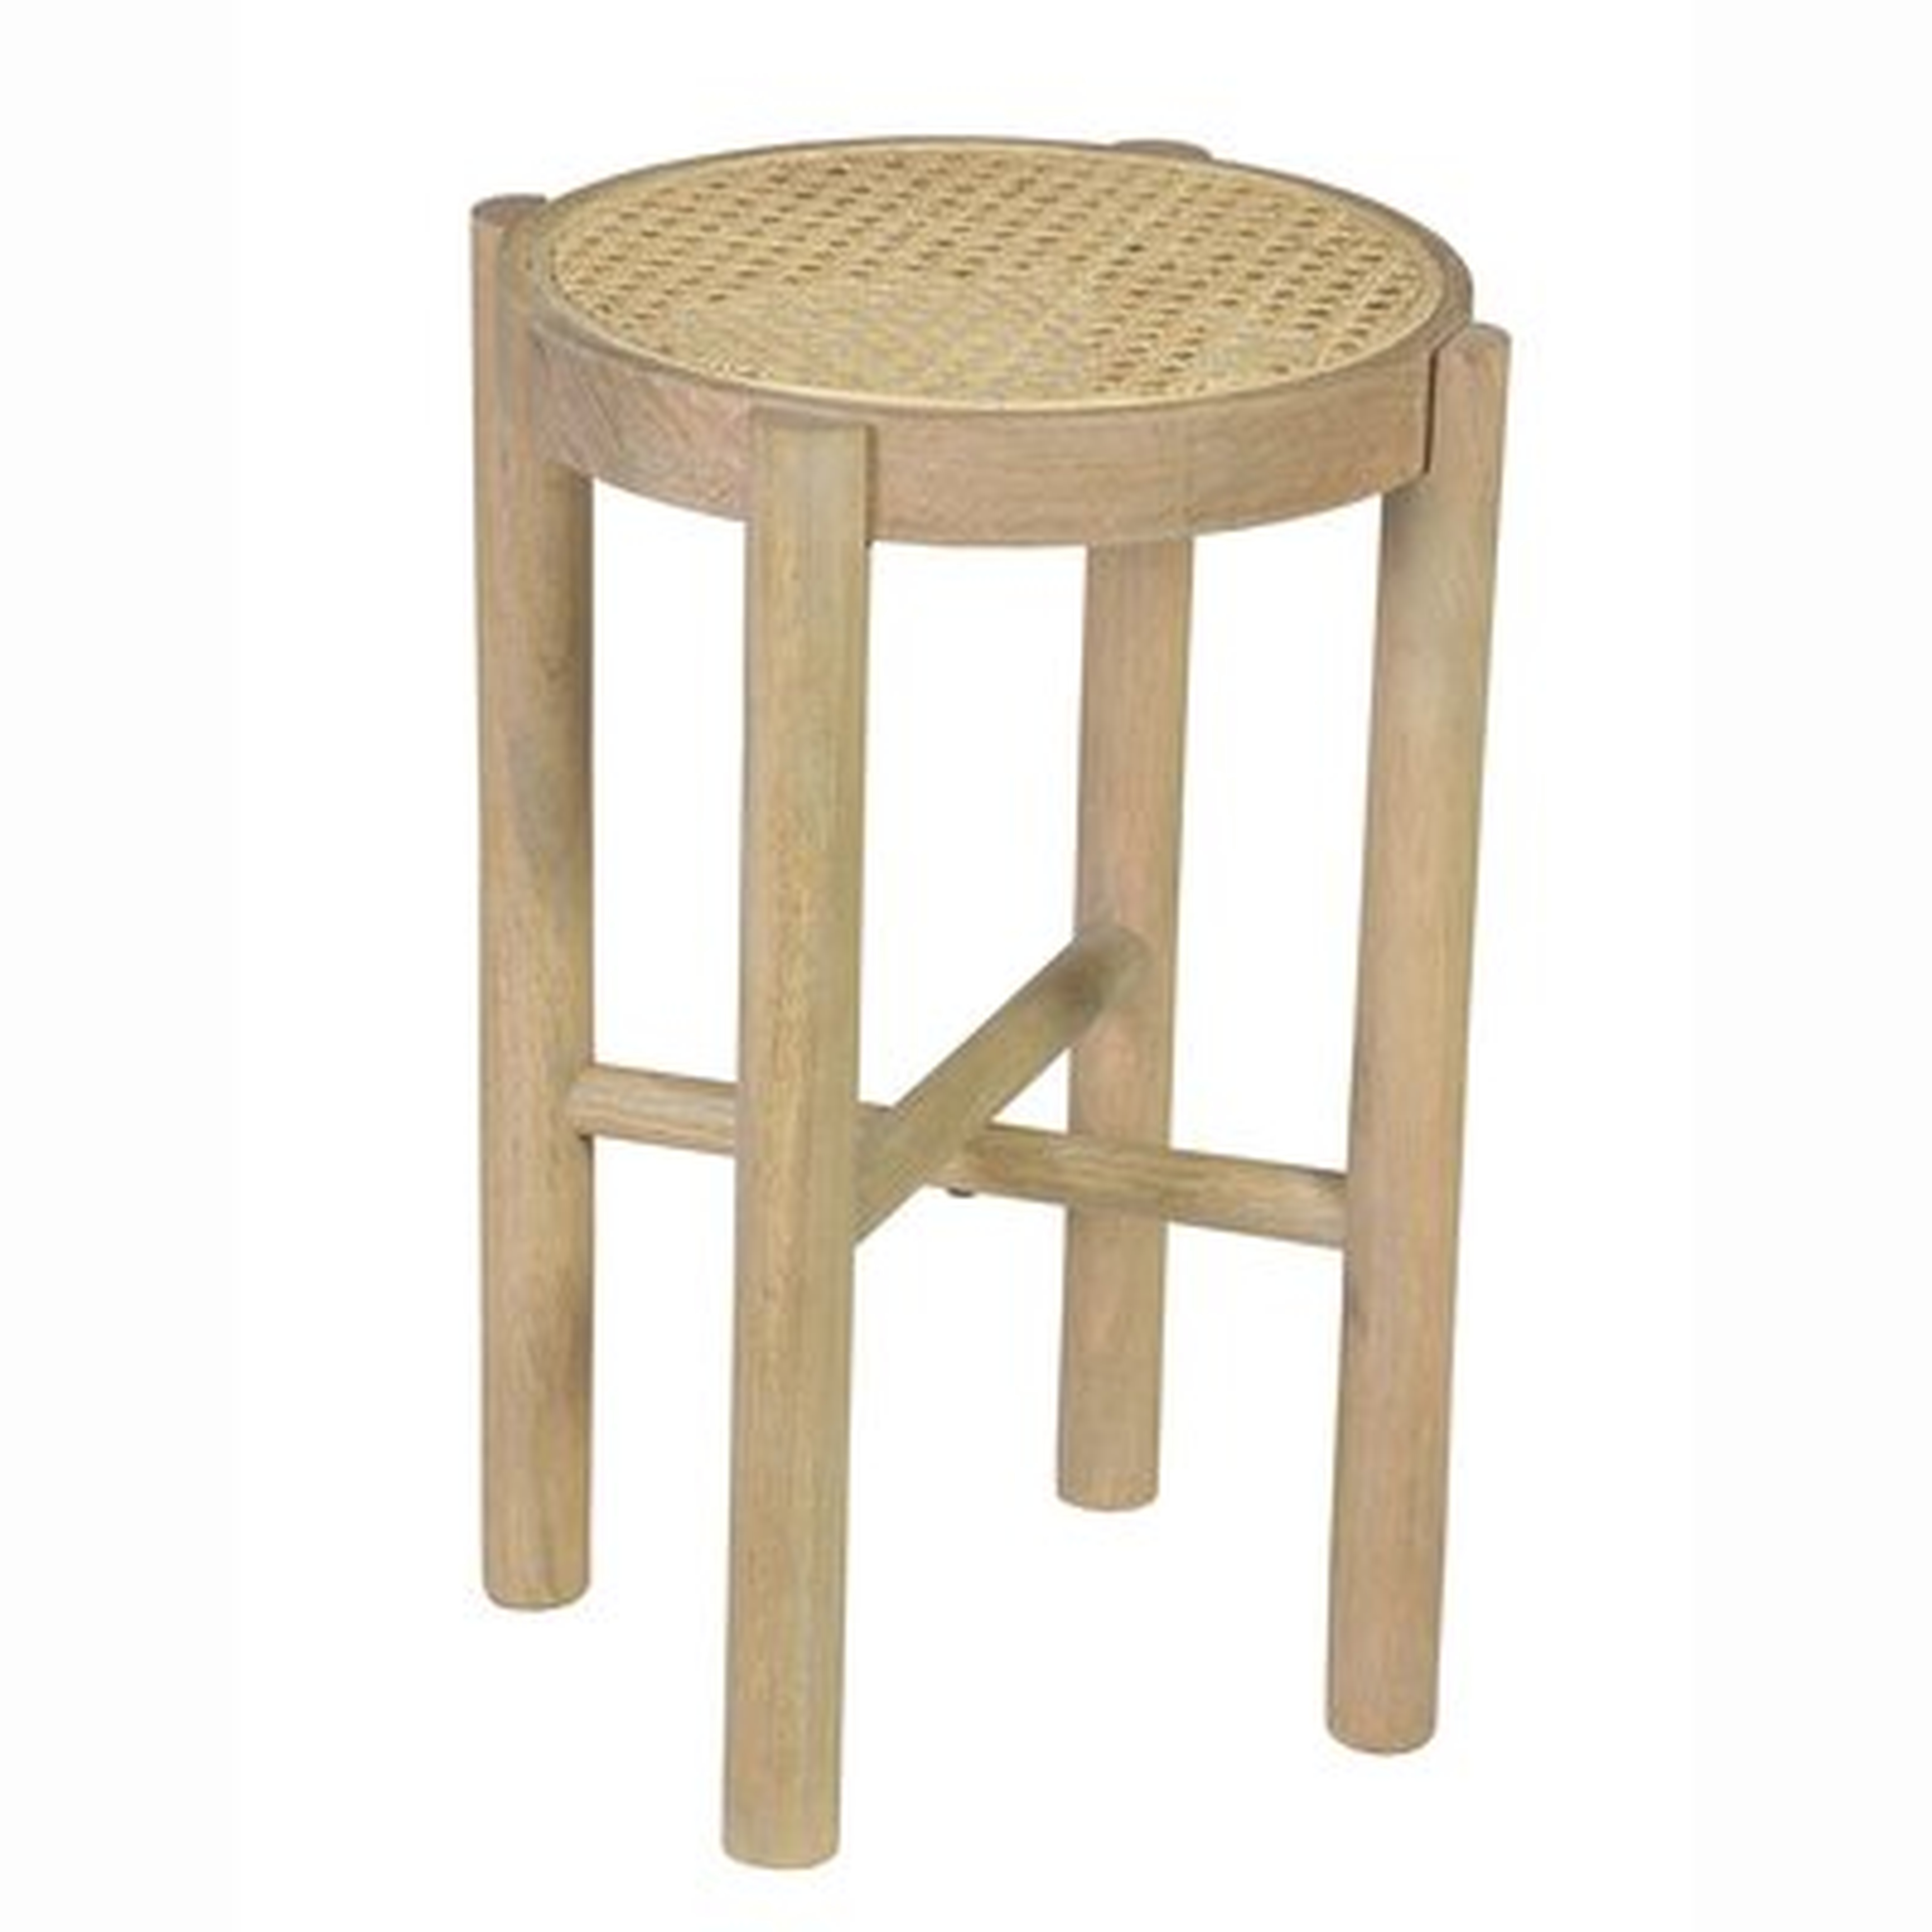 Calydon Solid Wood End Table, Natural - Wayfair